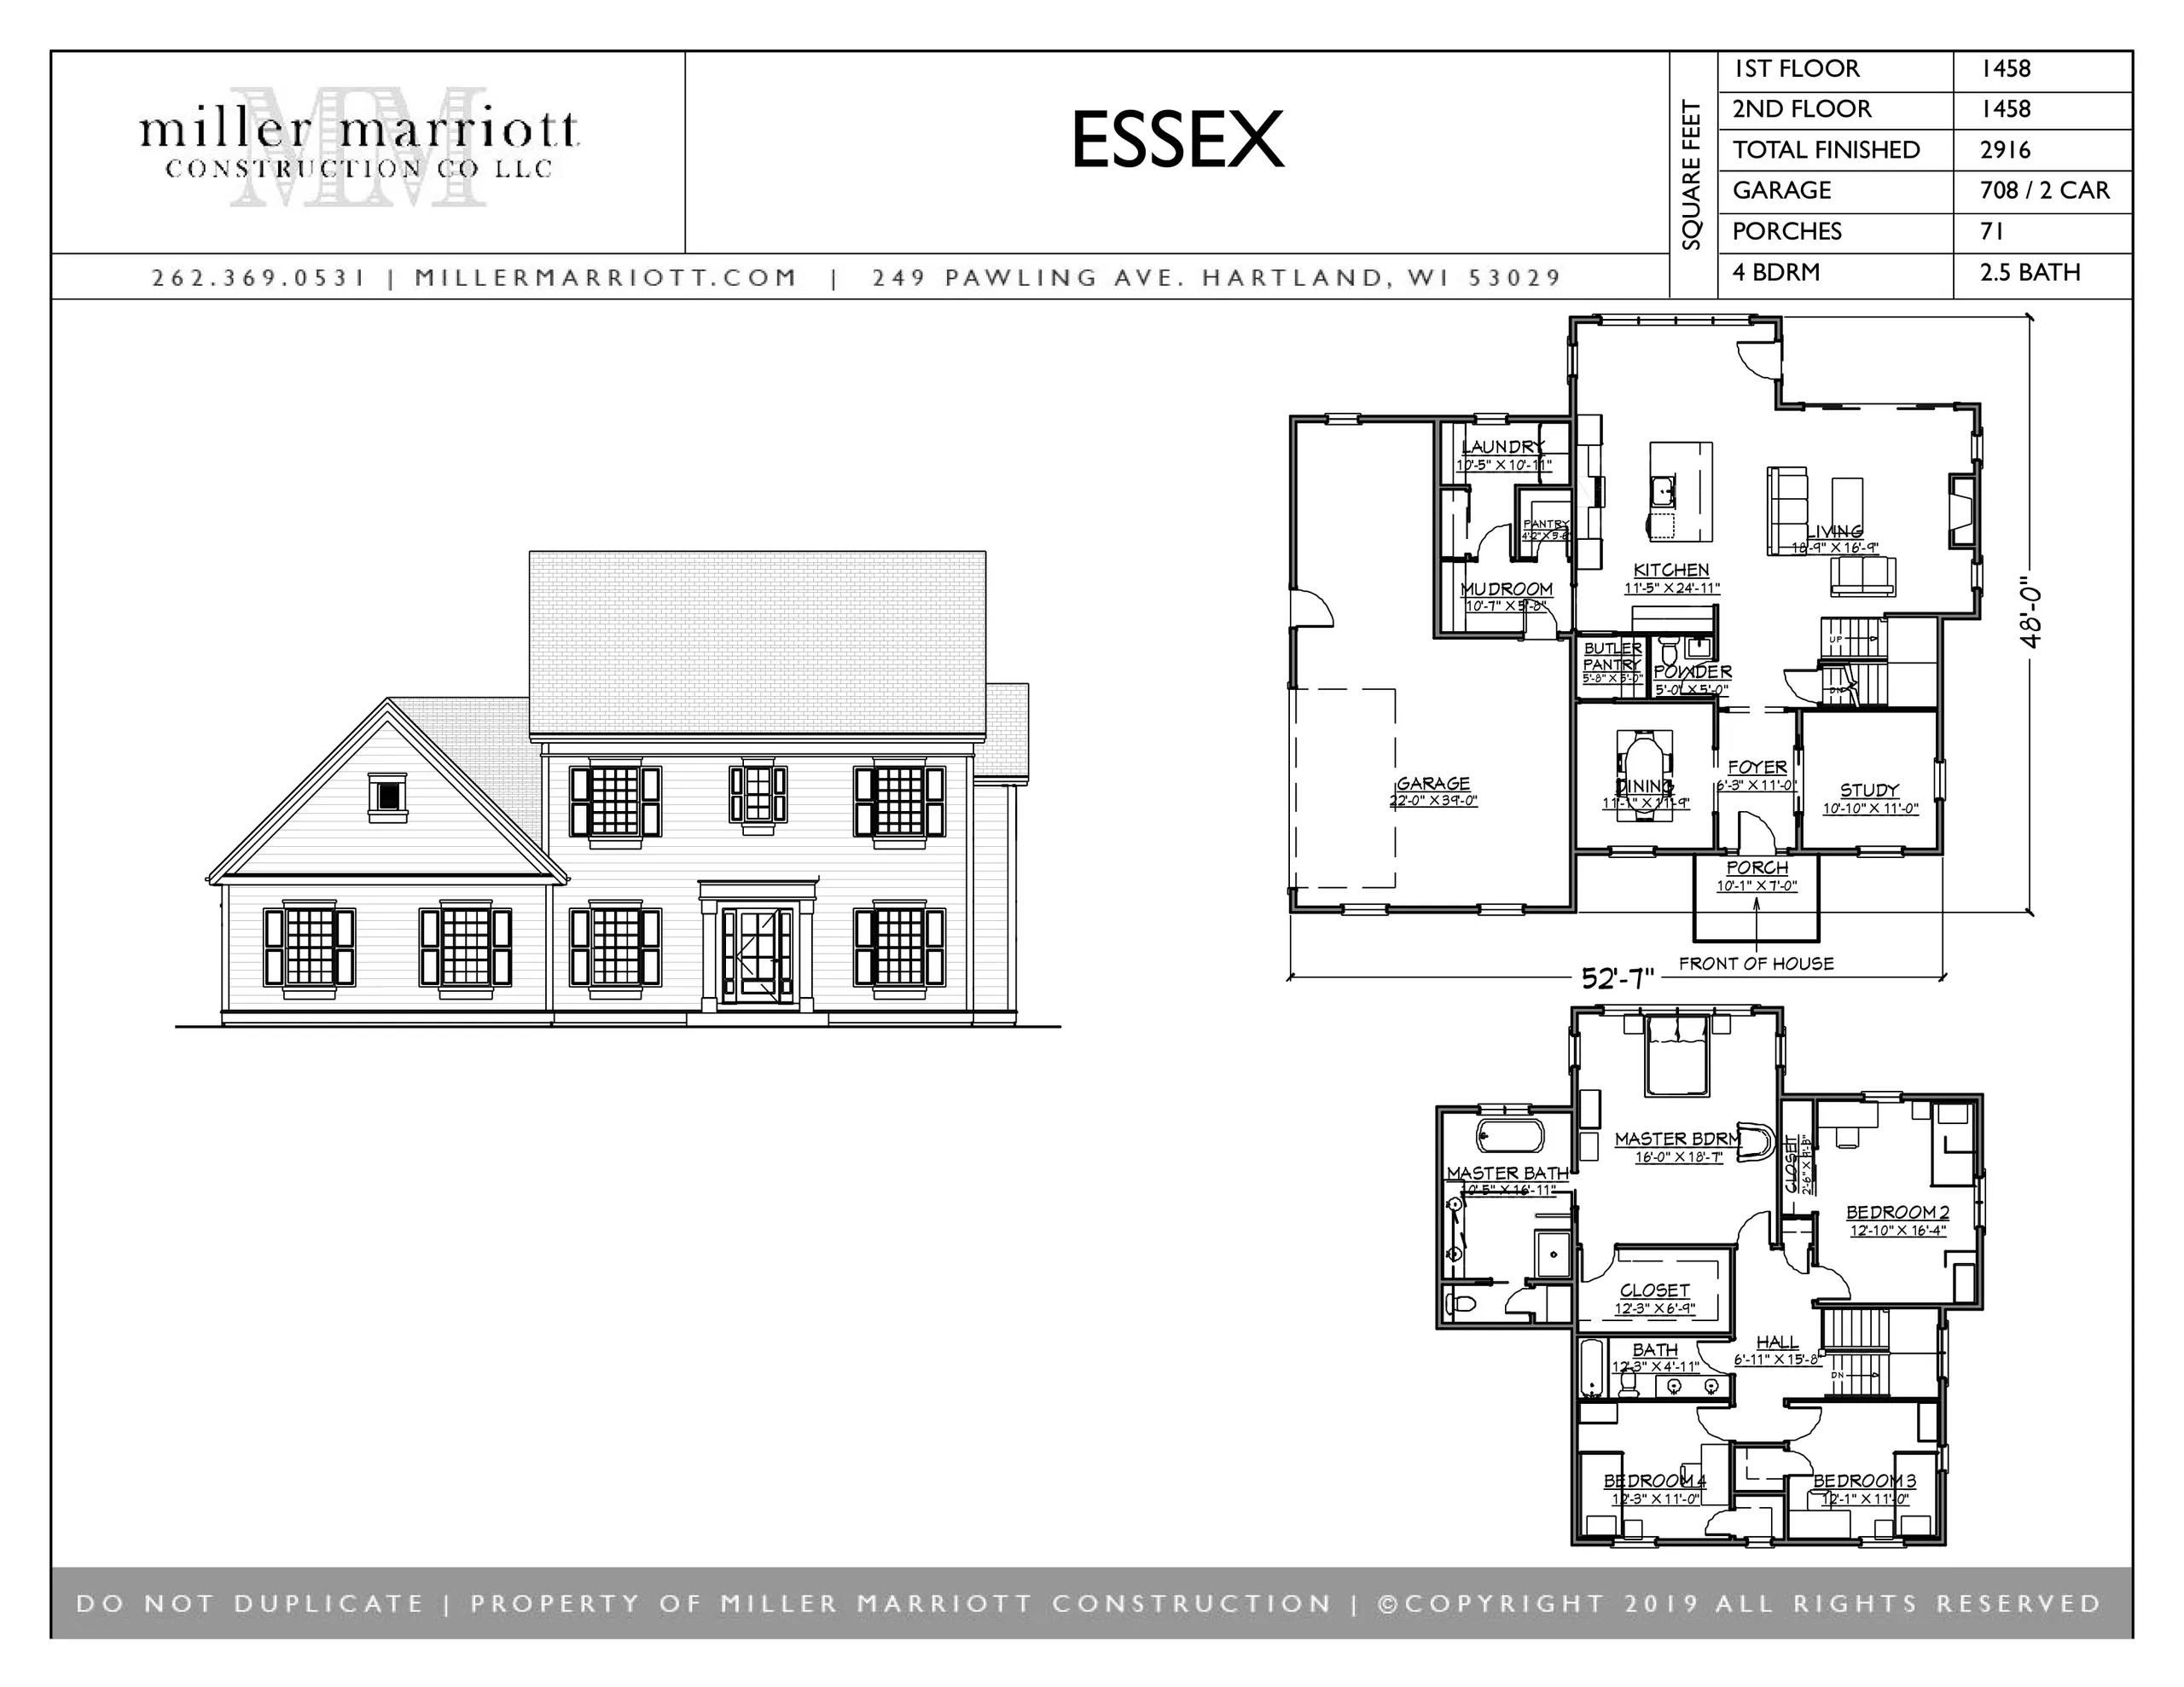 Essex Home Plan